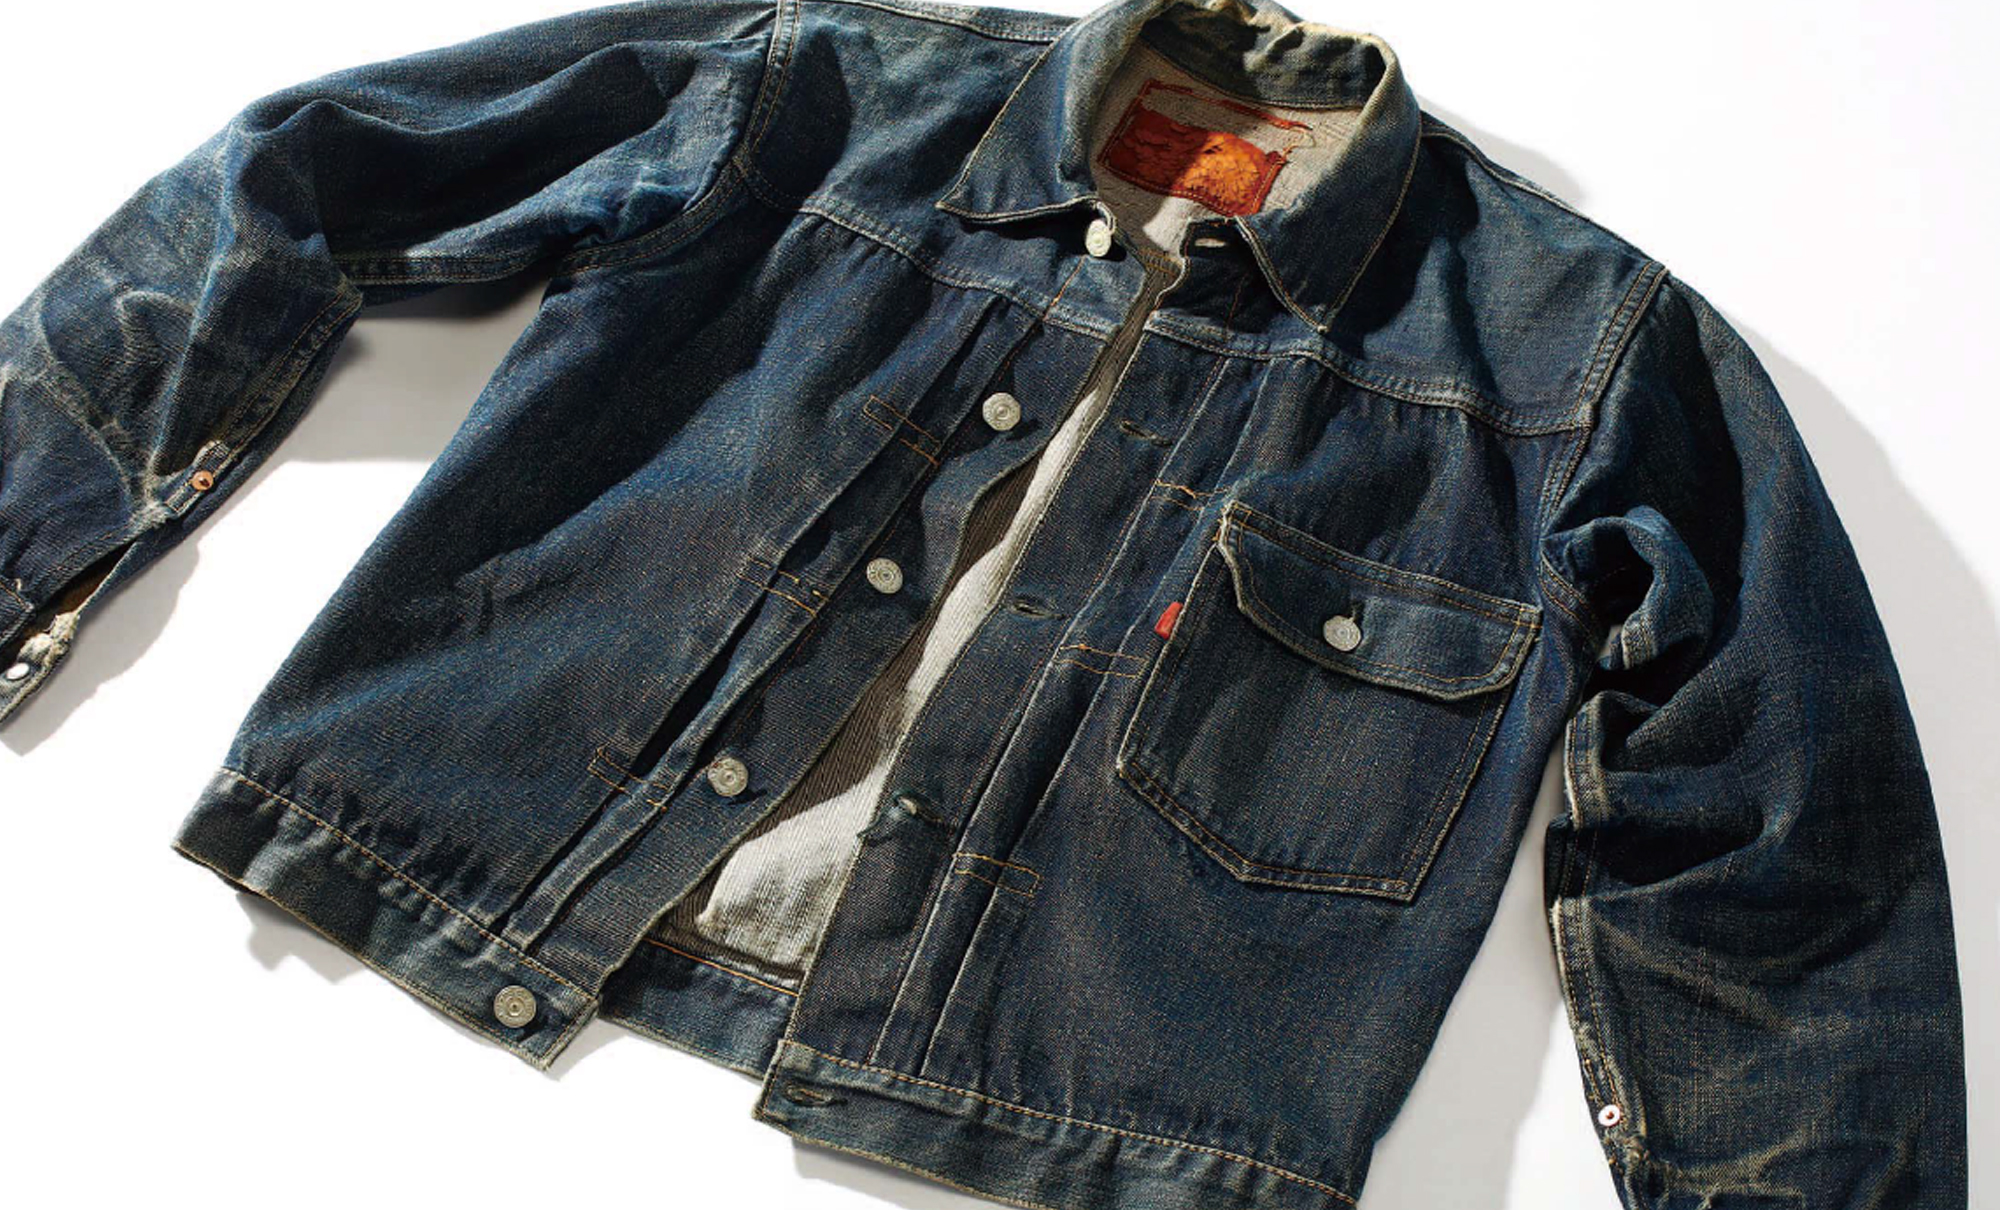 Levi's® Vintage Denim Jackets Detailed in New Book - Levi Strauss